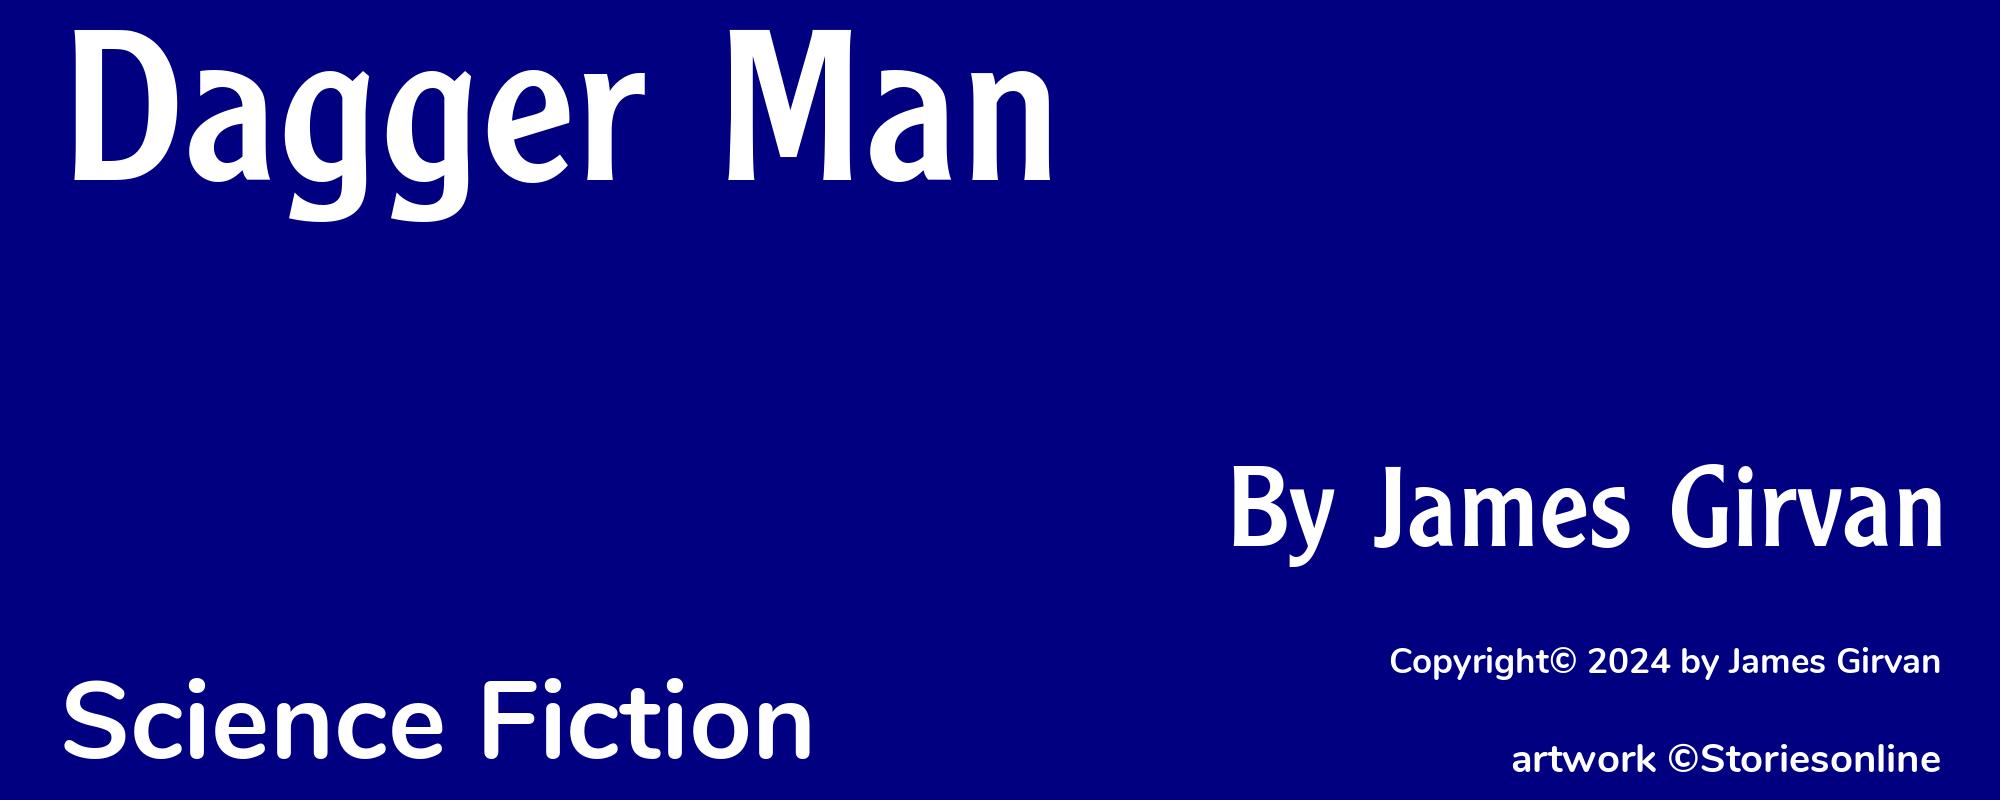 Dagger Man - Cover